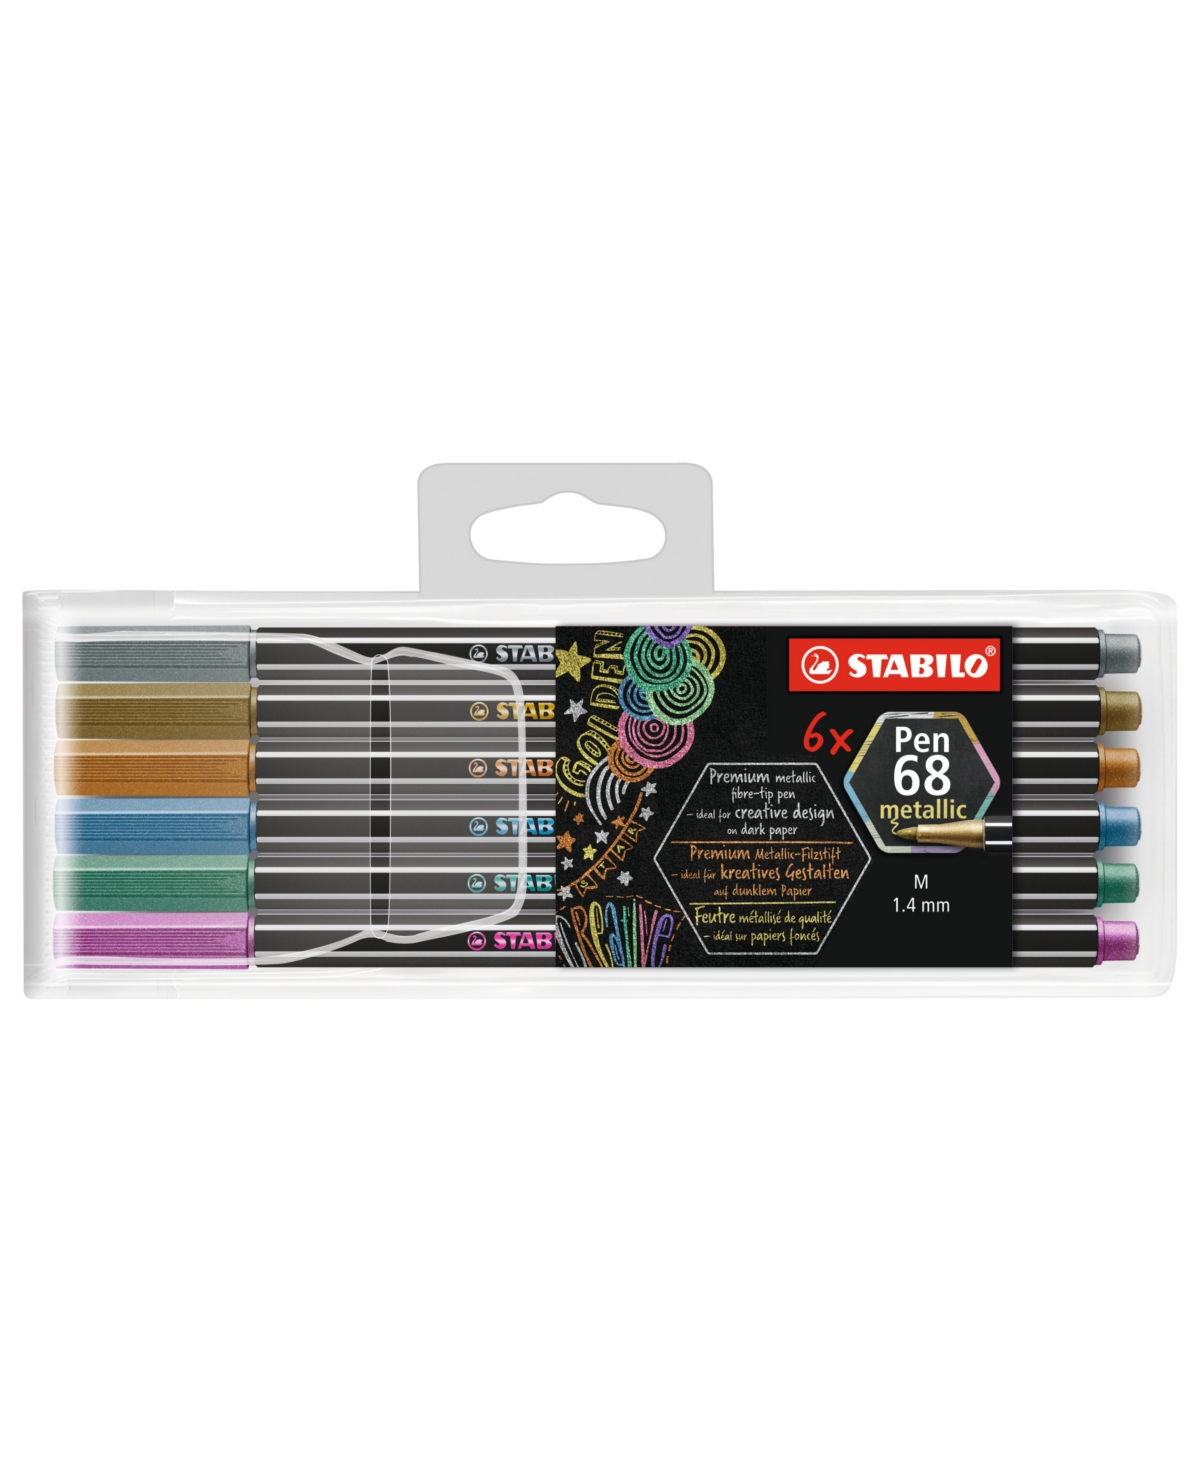 Writing felt-tip pen STABILO pointMax - pack of 4 pastel